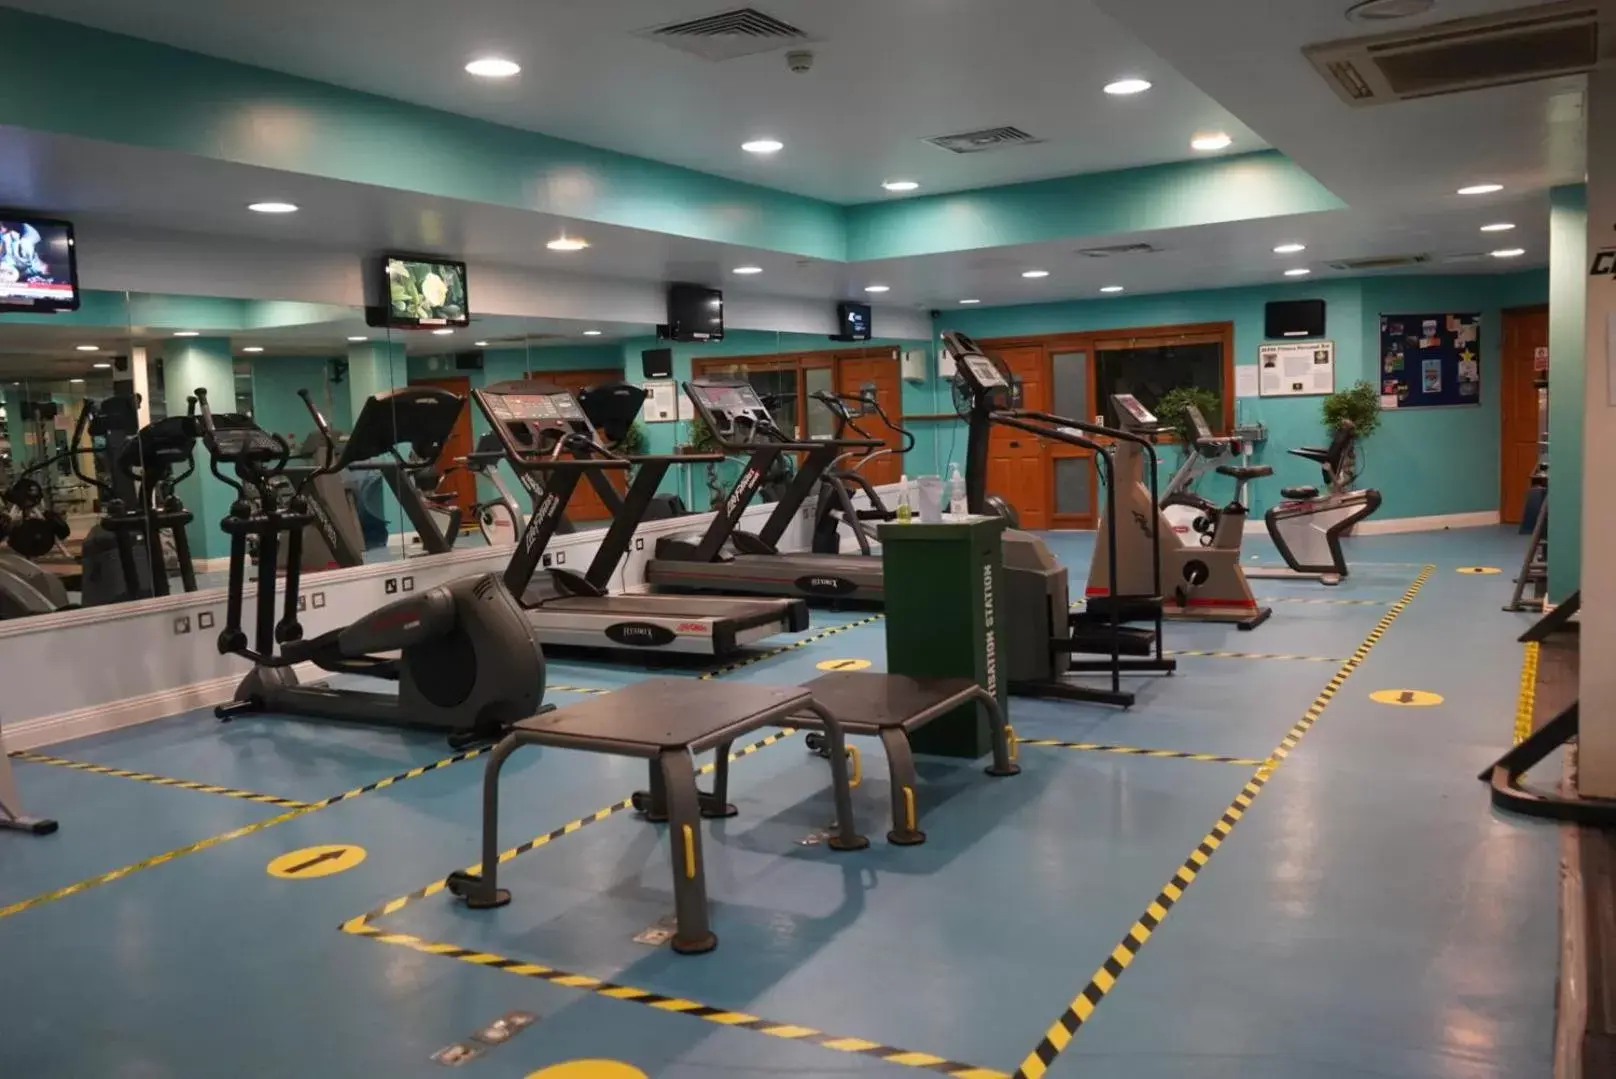 Fitness centre/facilities, Fitness Center/Facilities in Hustyns Resort Cornwall